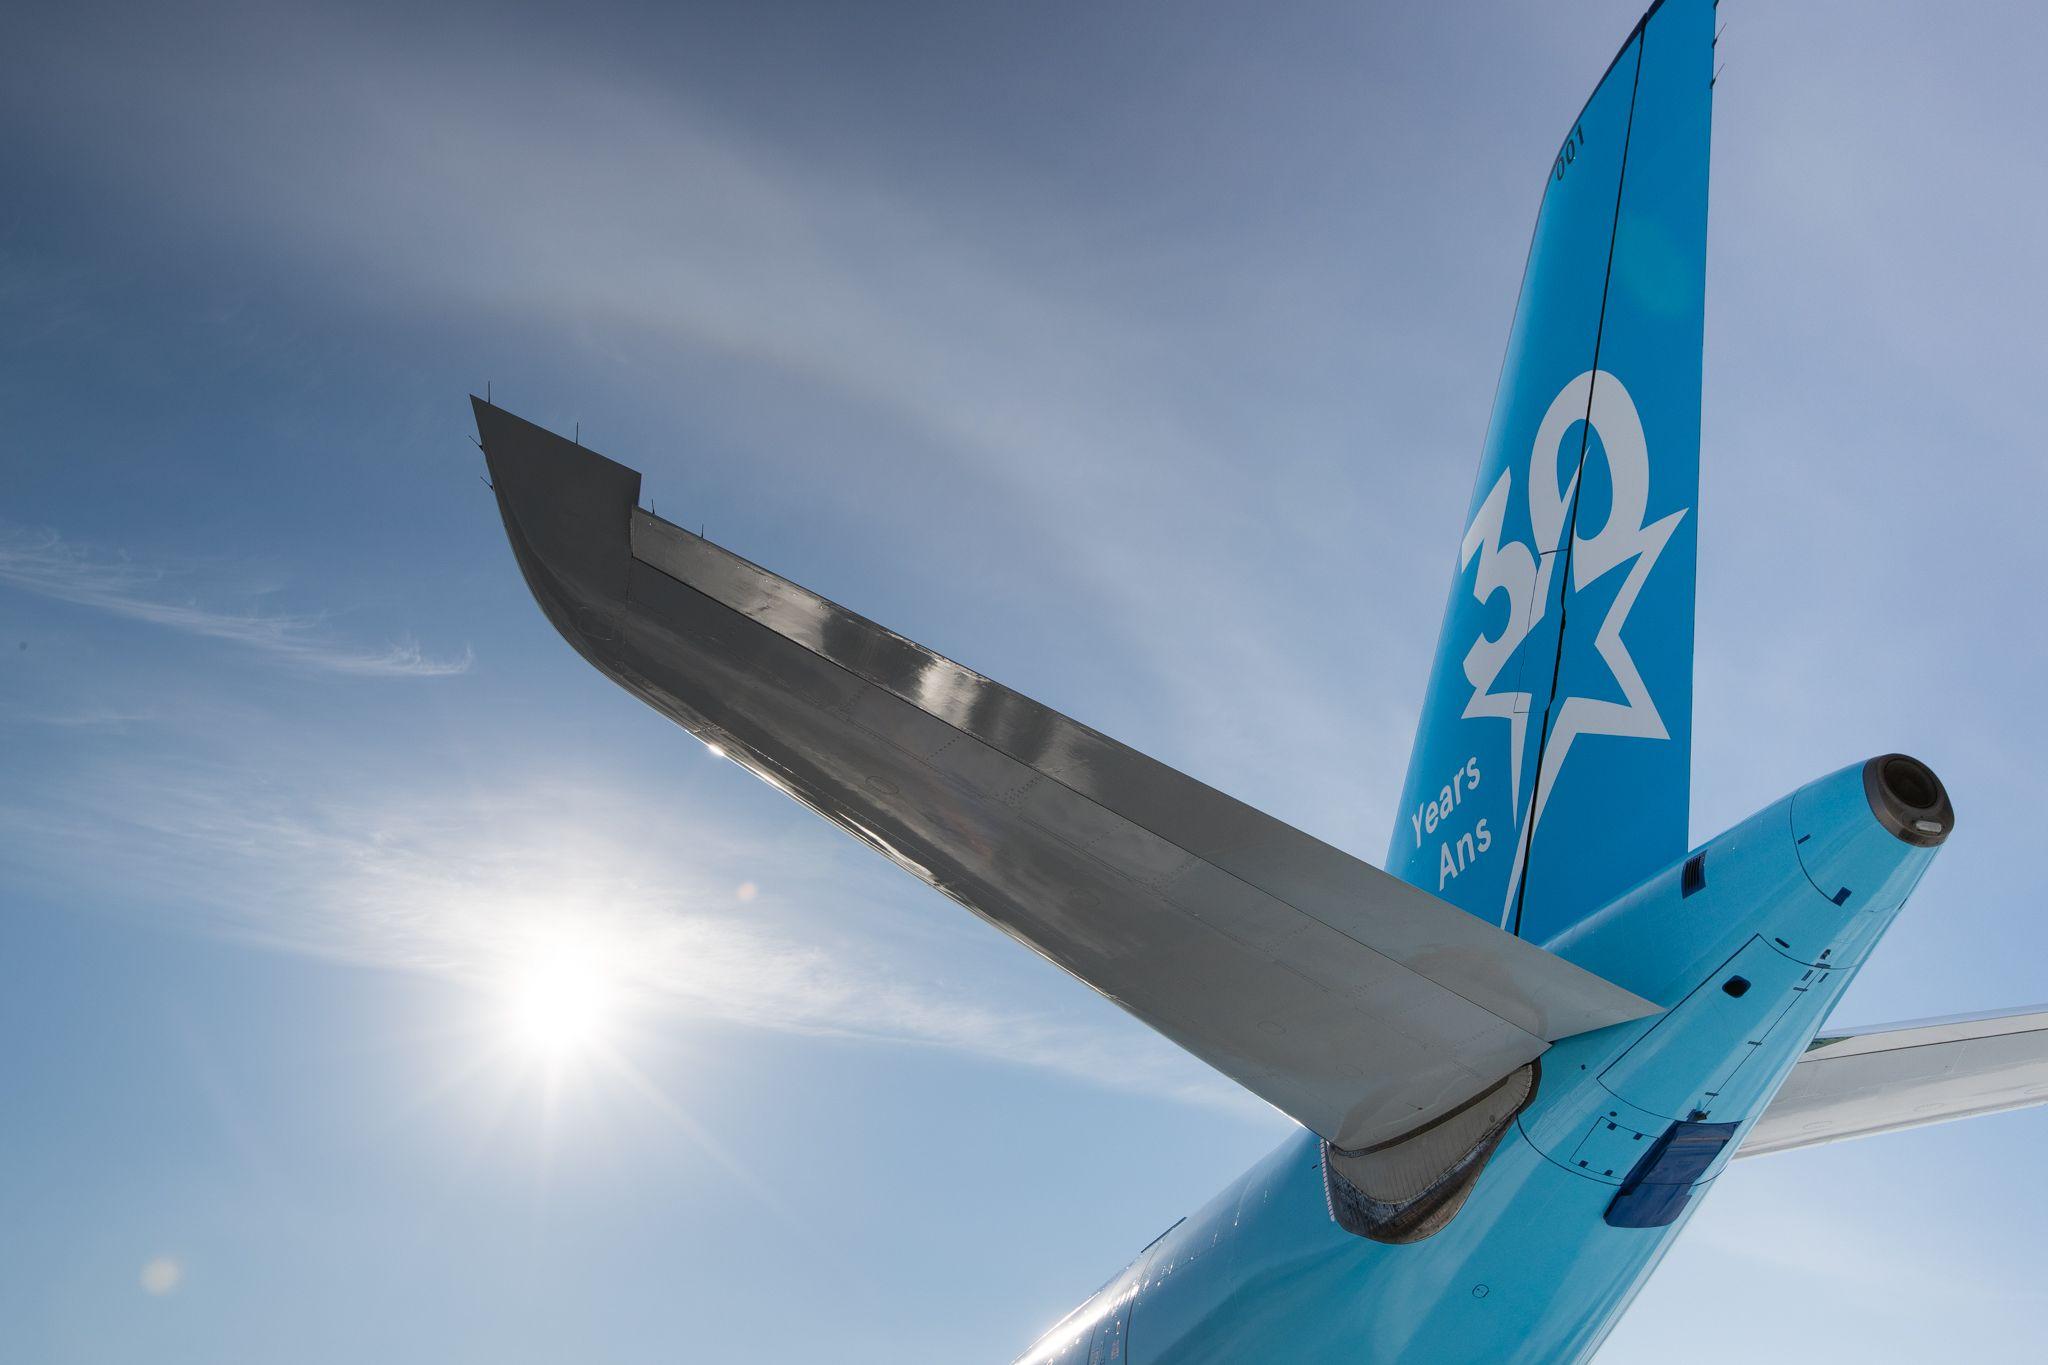 Aircraft Anniversary Logo - Transat unveils first 30th anniversary aircraft